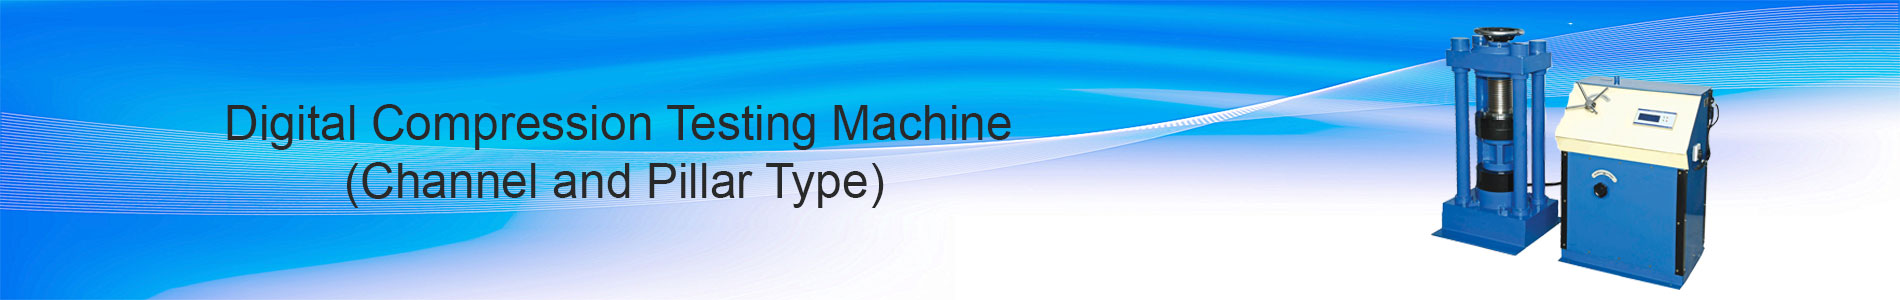 Digital Compression Testing Machine Channel and Pillar Type